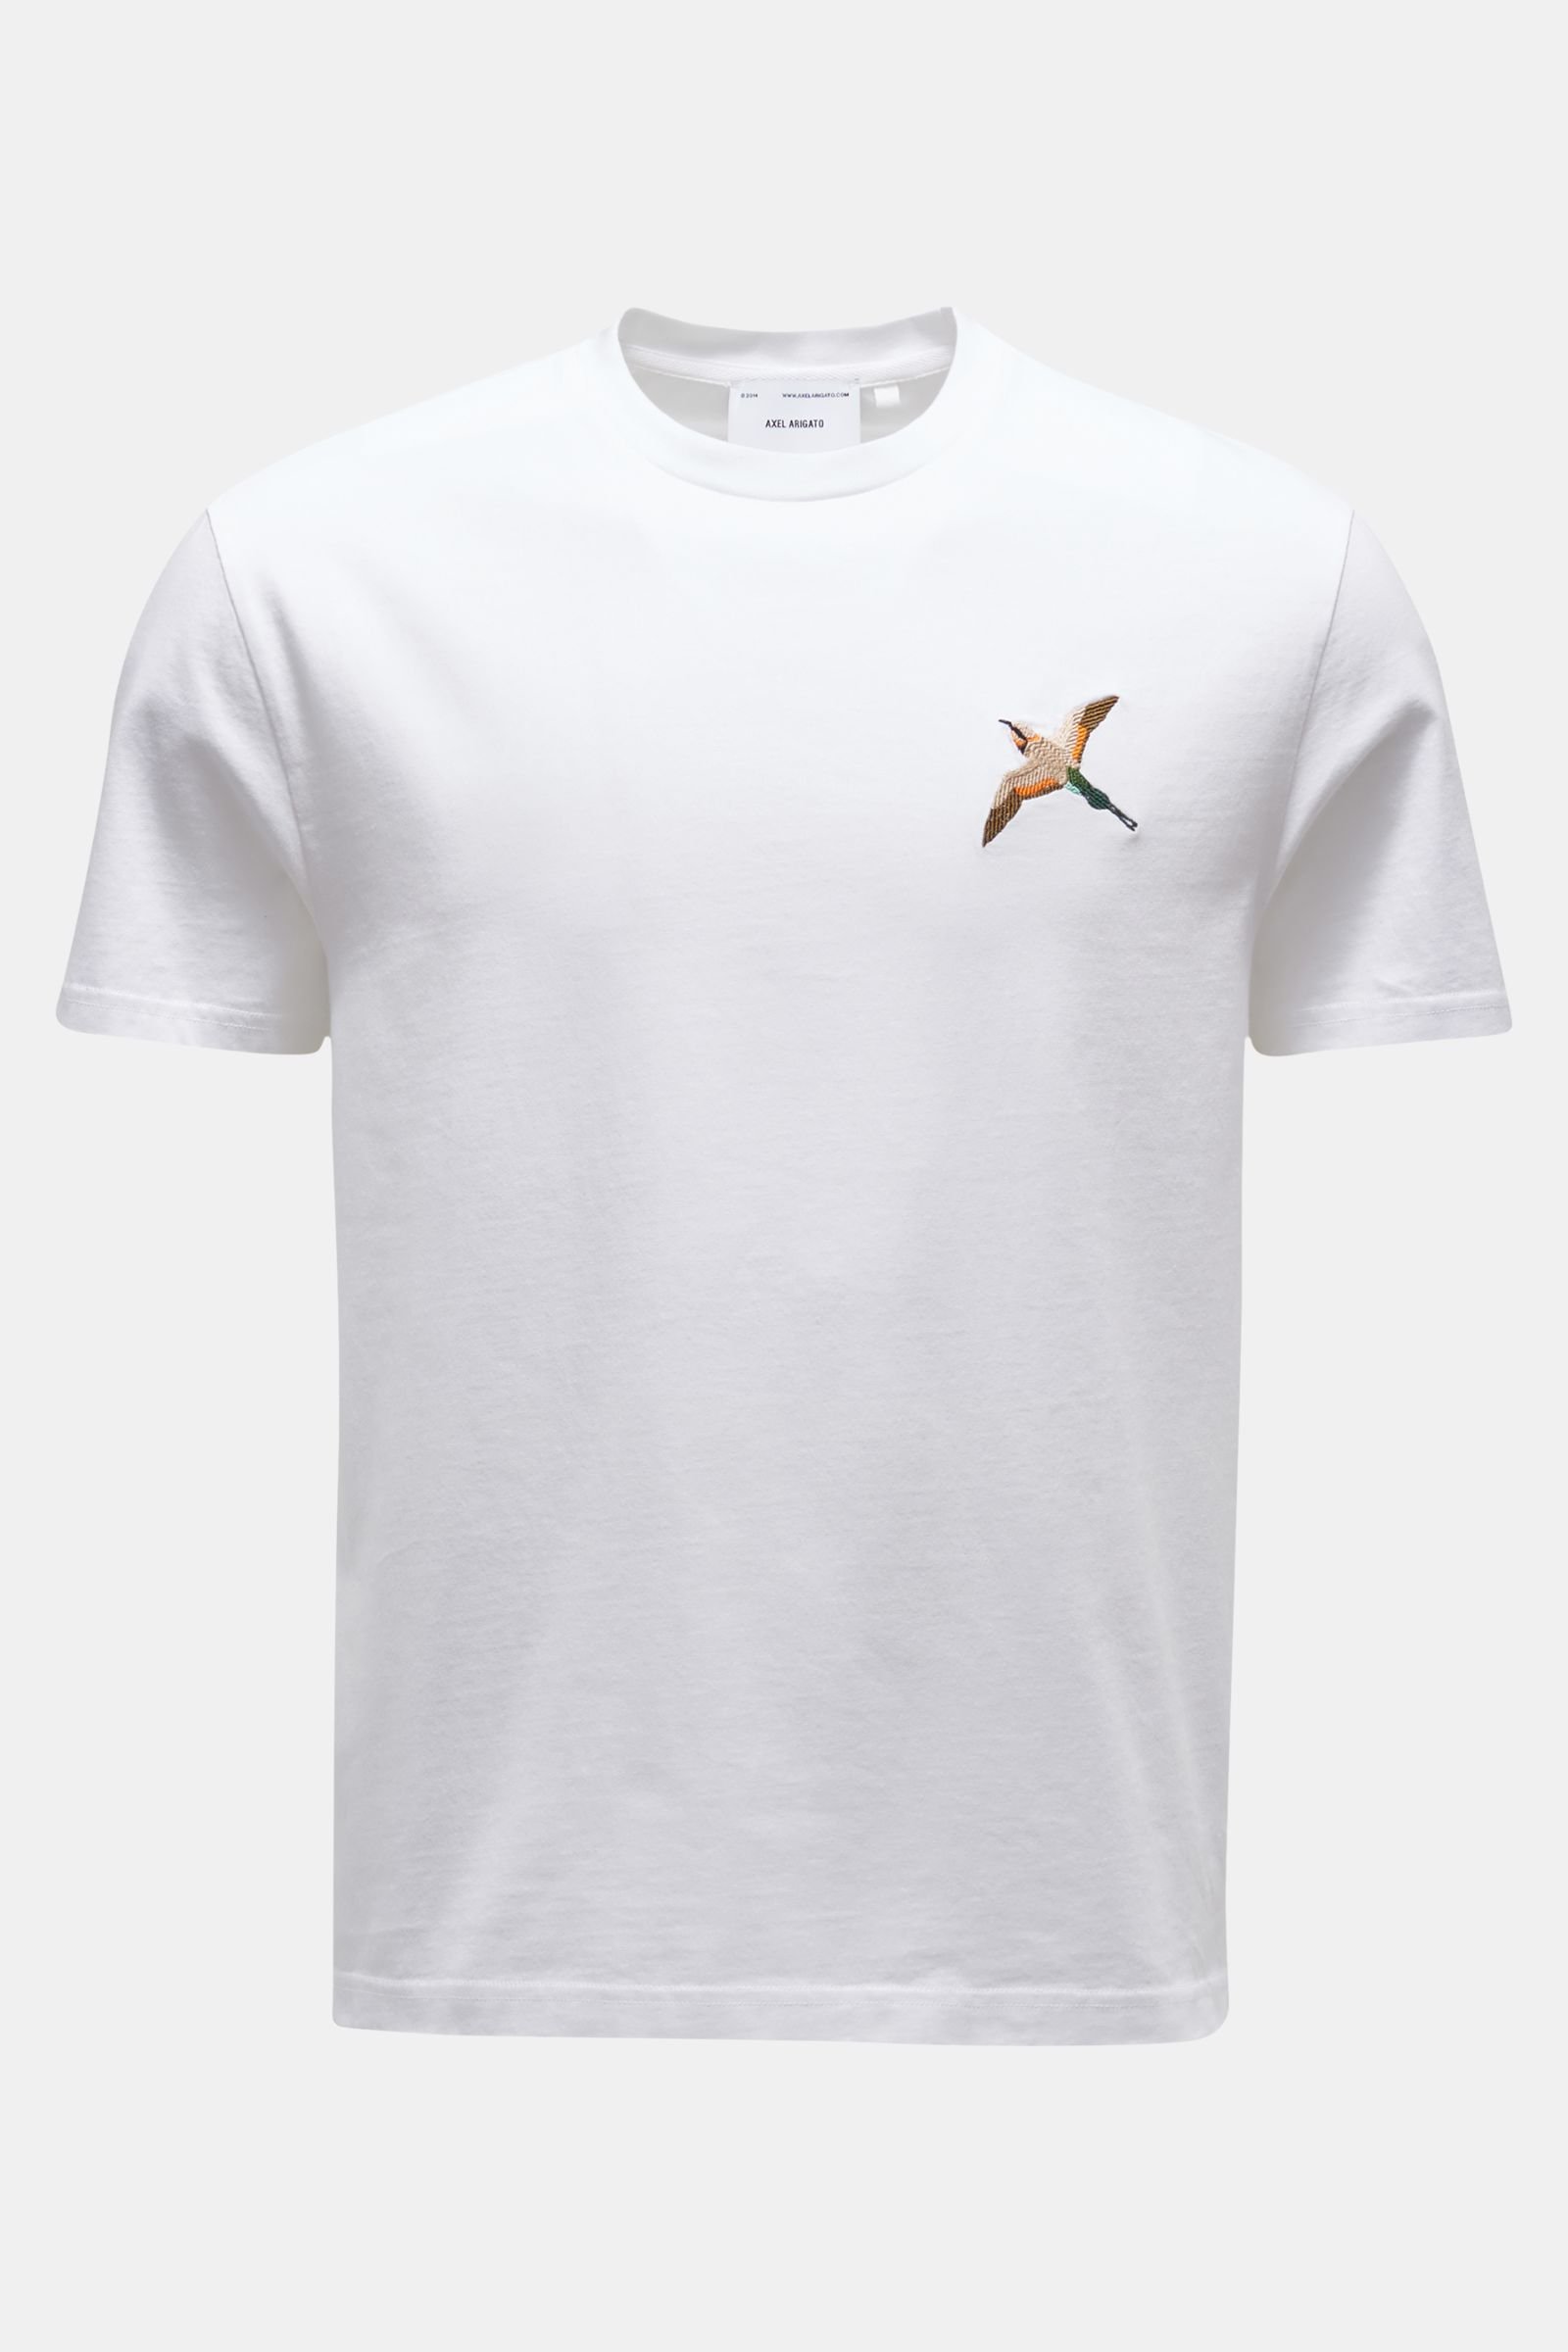 AXEL ARIGATO crew neck T-shirt 'Single Bee Eater' white | BRAUN 